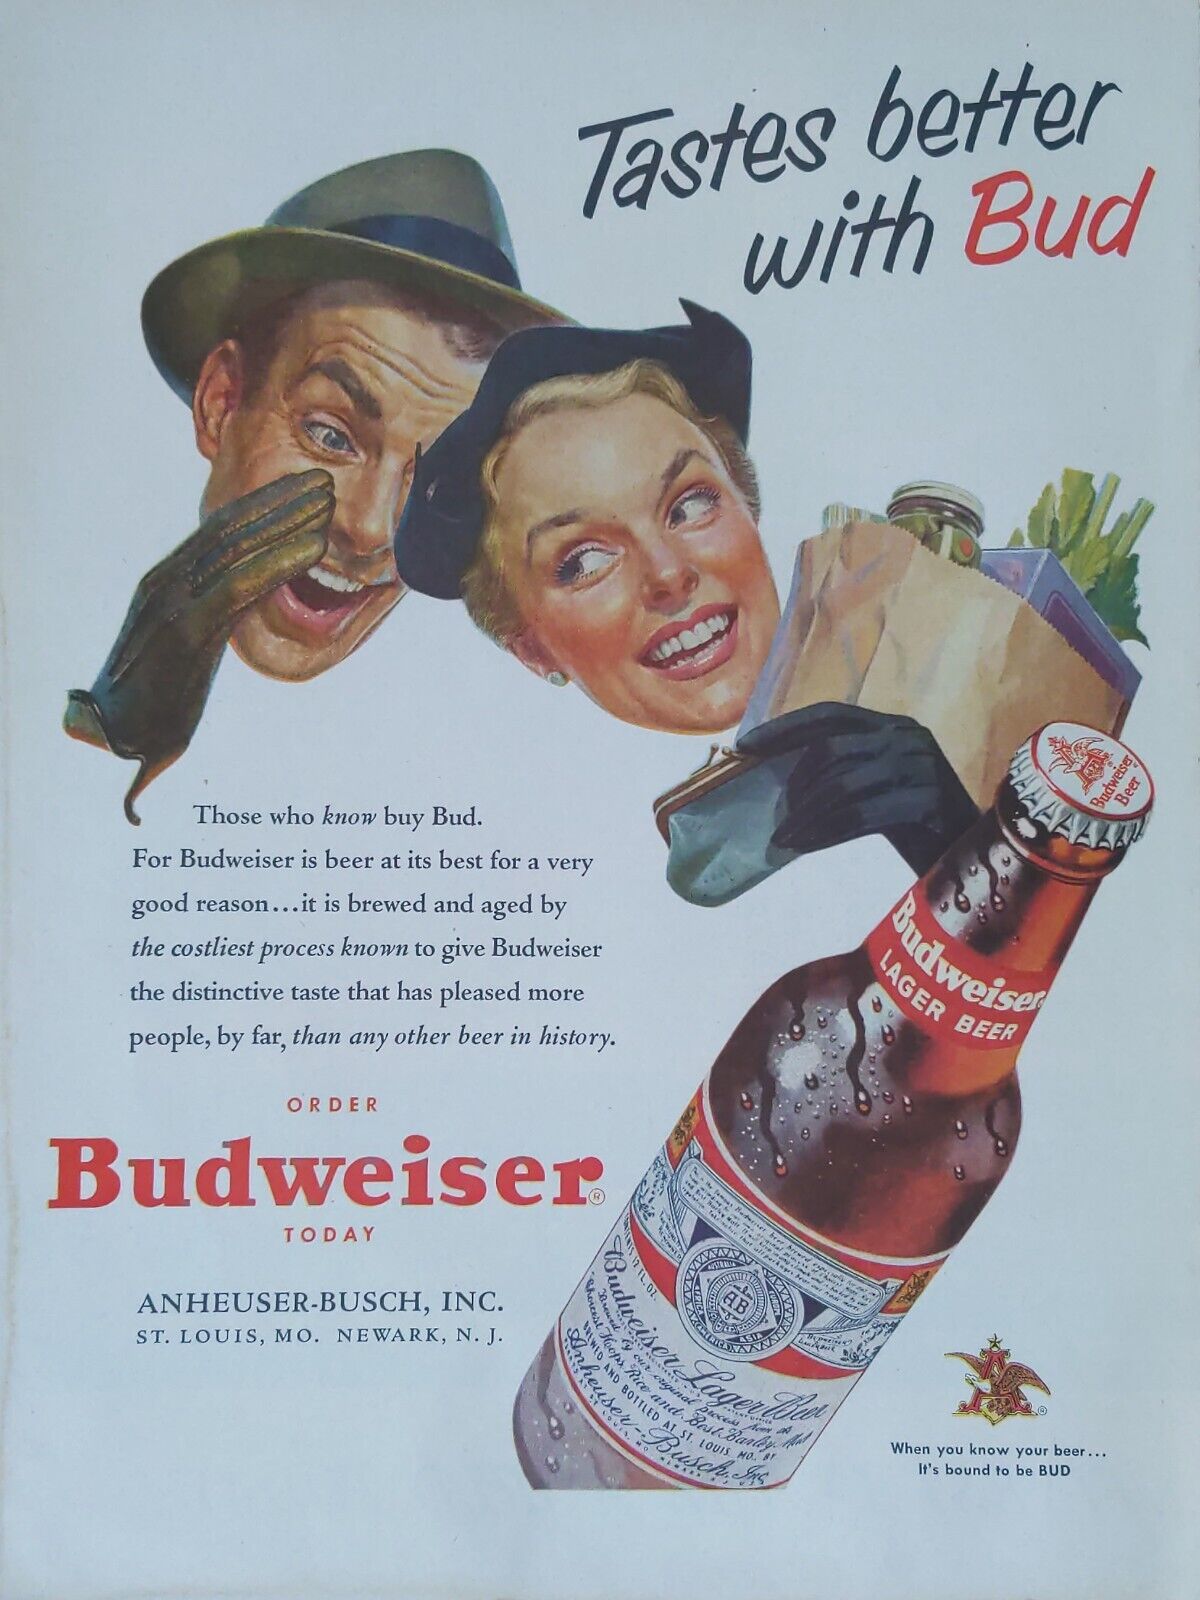 1953 vintage Budweiser print ad. Tastes better with bud